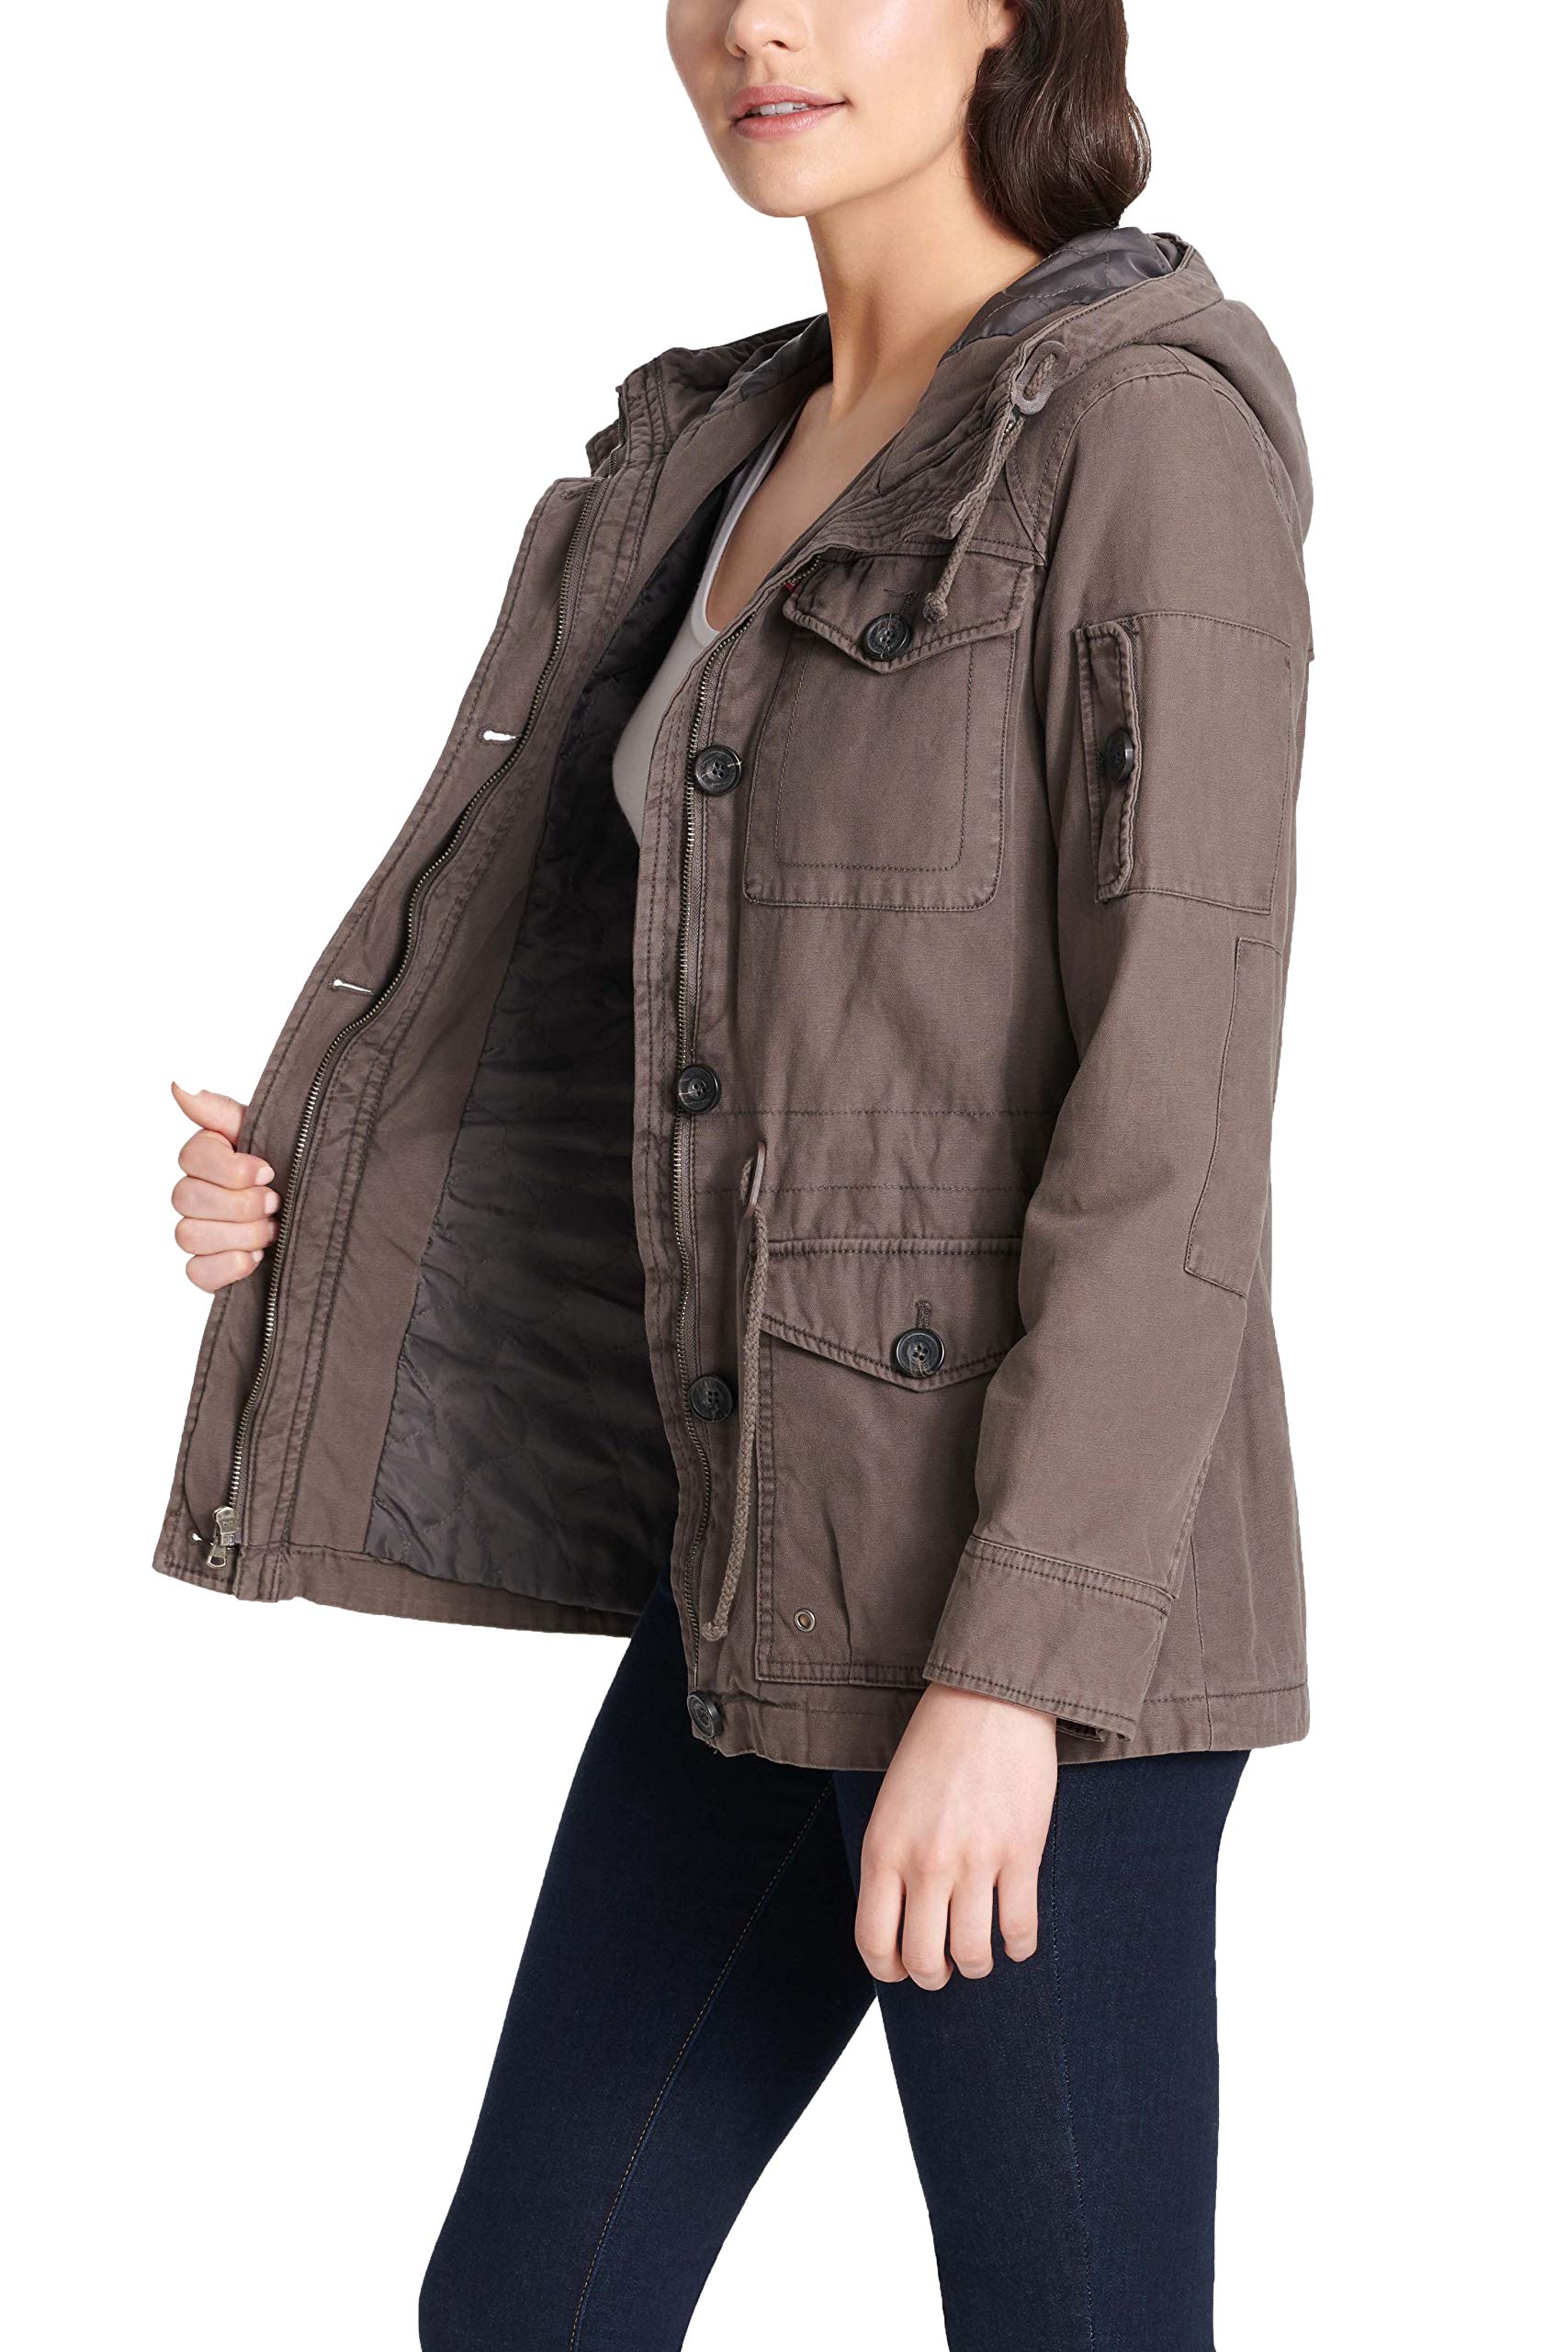 Levi's Women's Cotton Four Pocket Hooded Field Jacket (Standard & Plus Sizes)